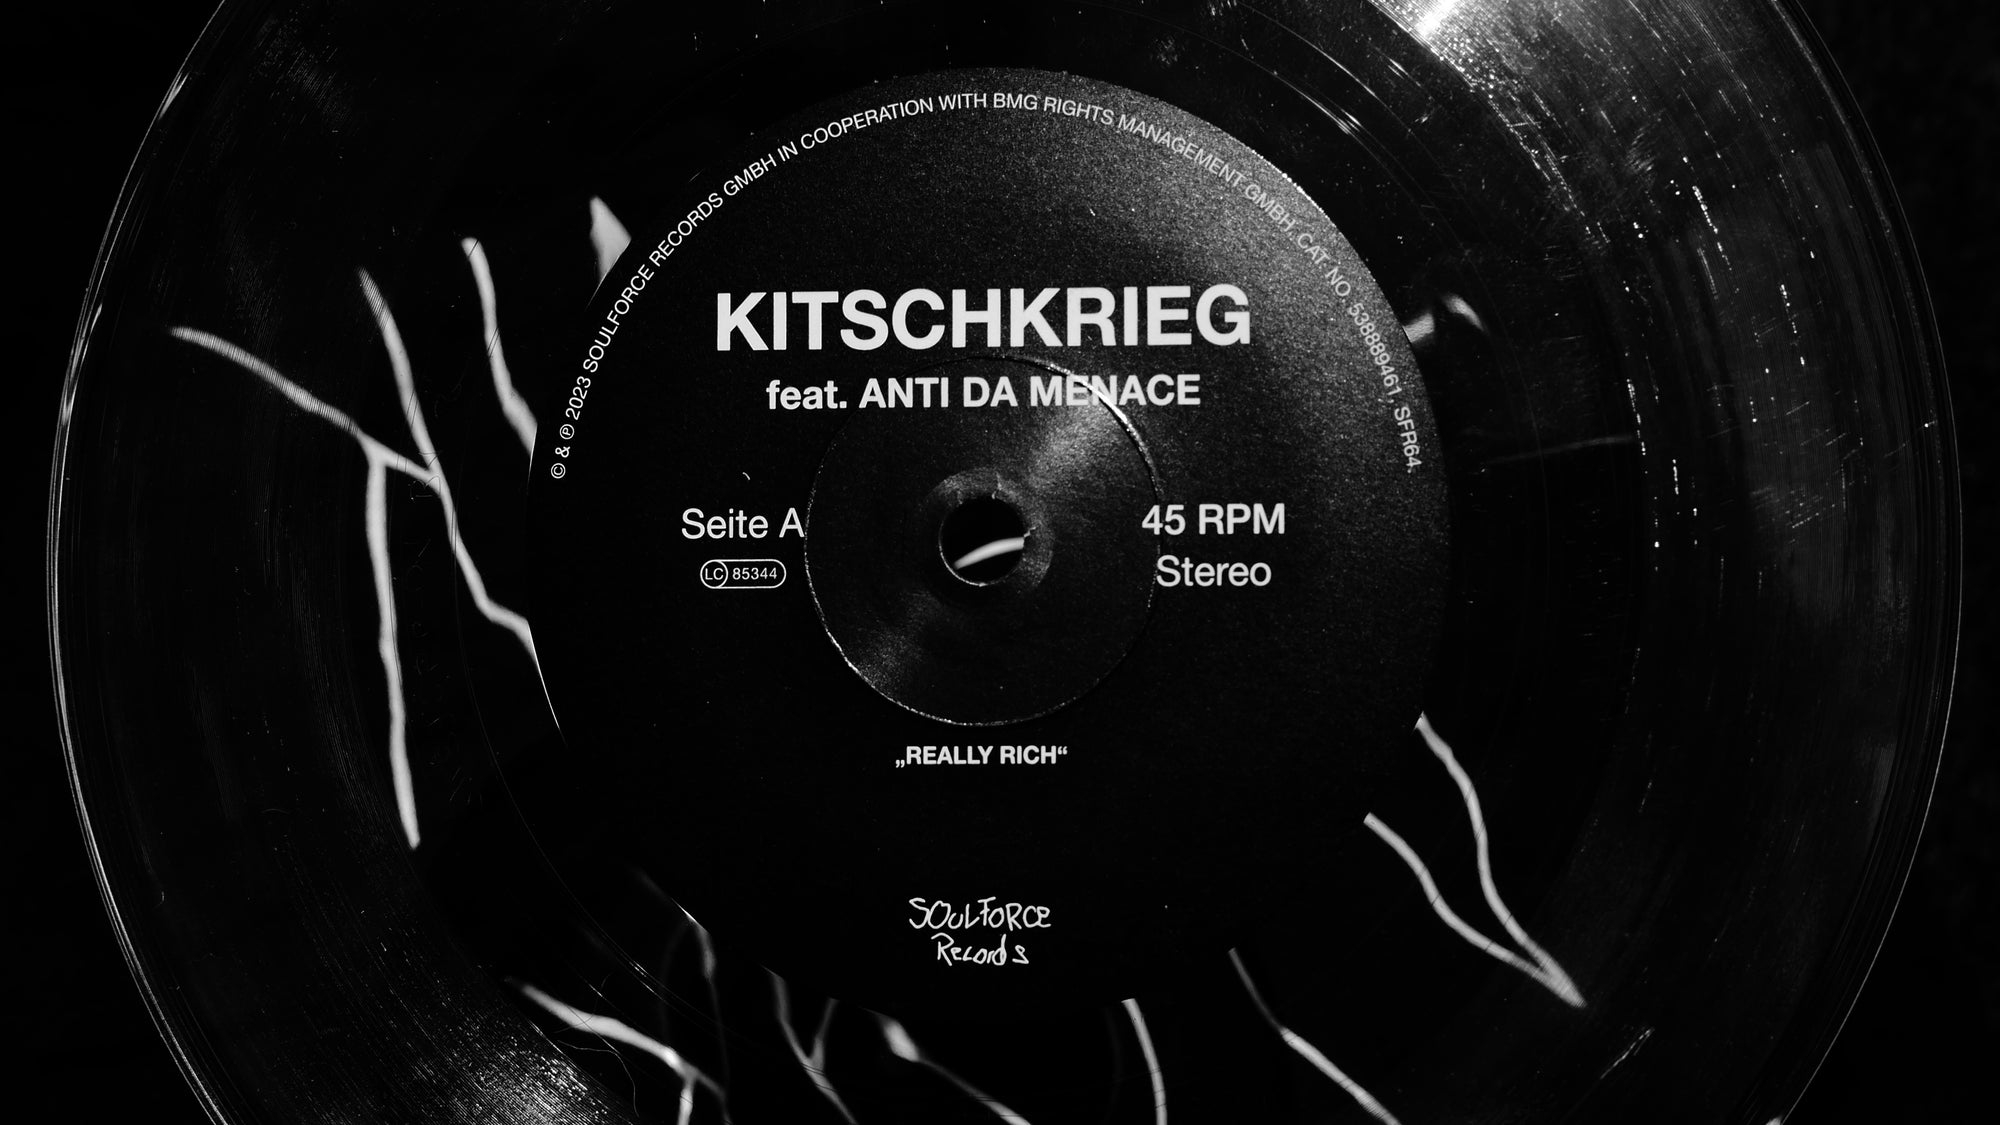 KK x ANTI DA MENACE - "REALLY RICH" 7" VINYL SINGLE